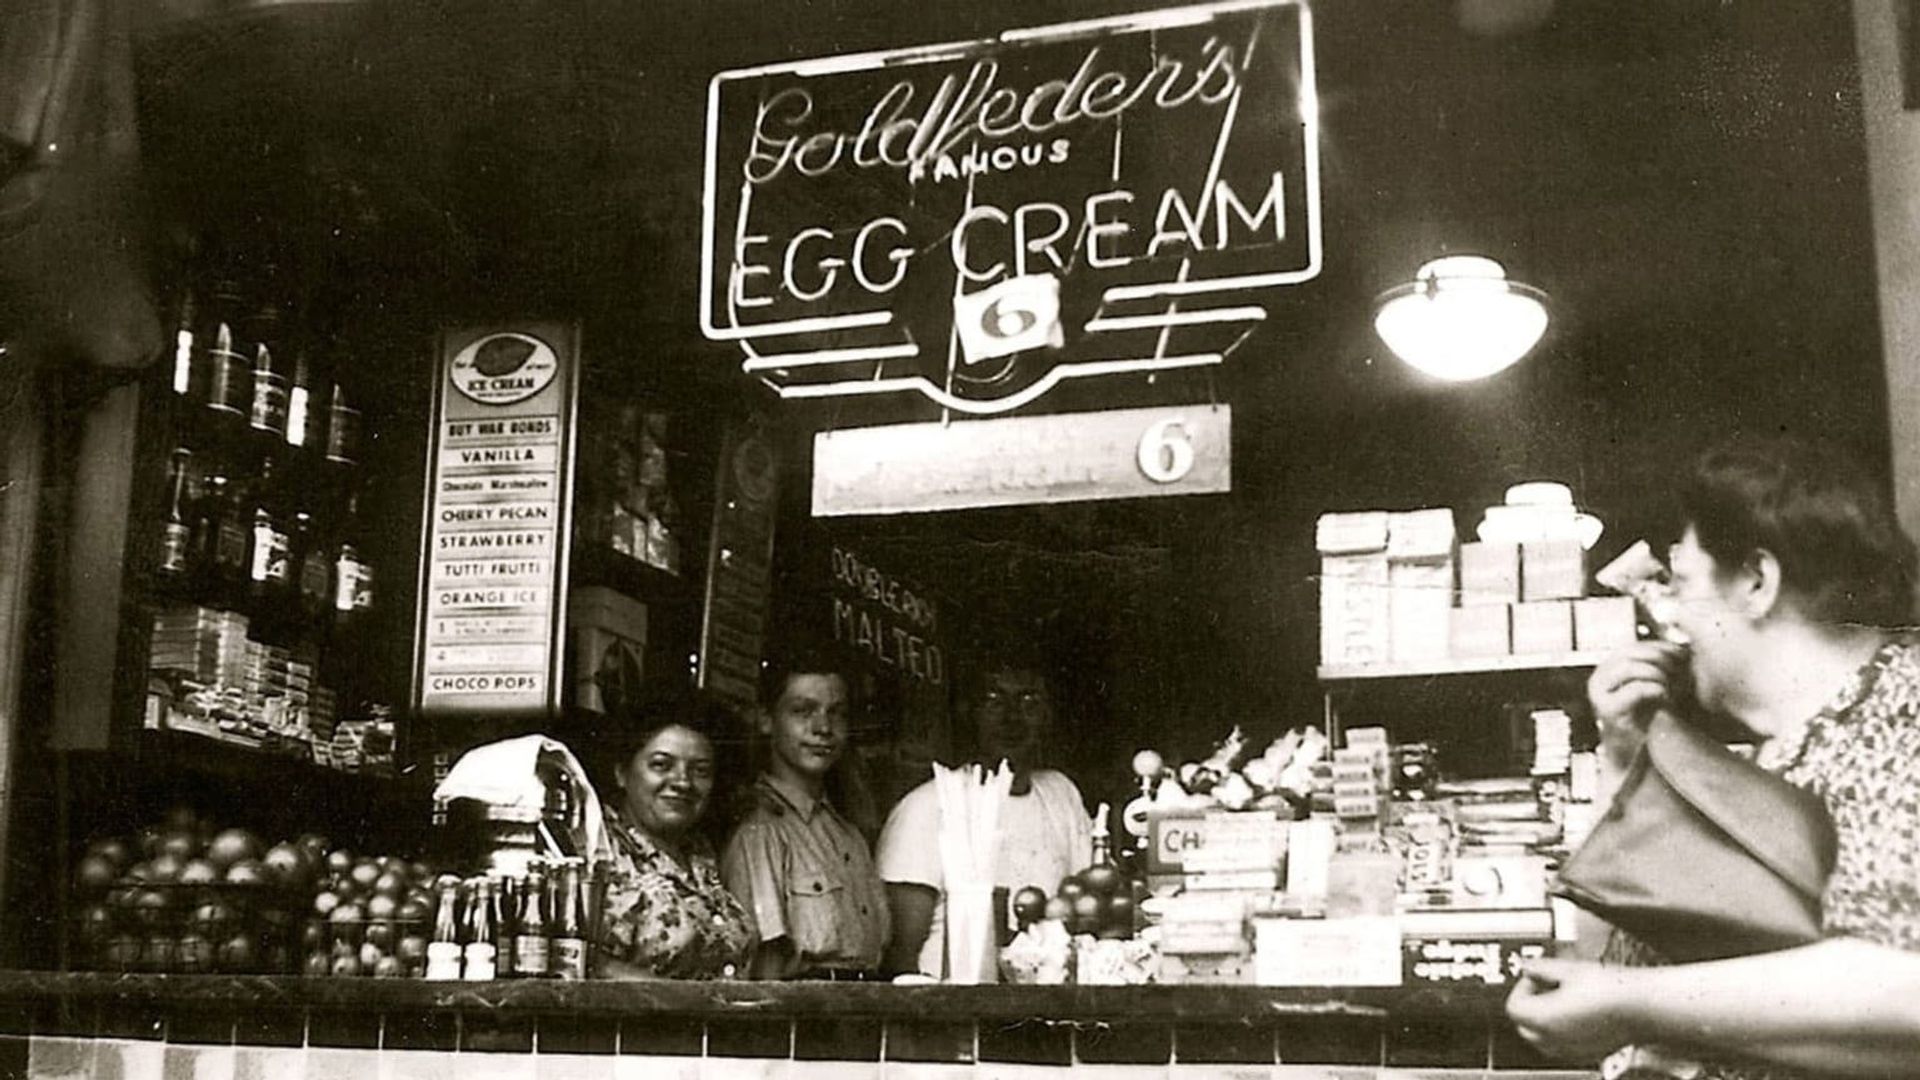 Egg Cream background